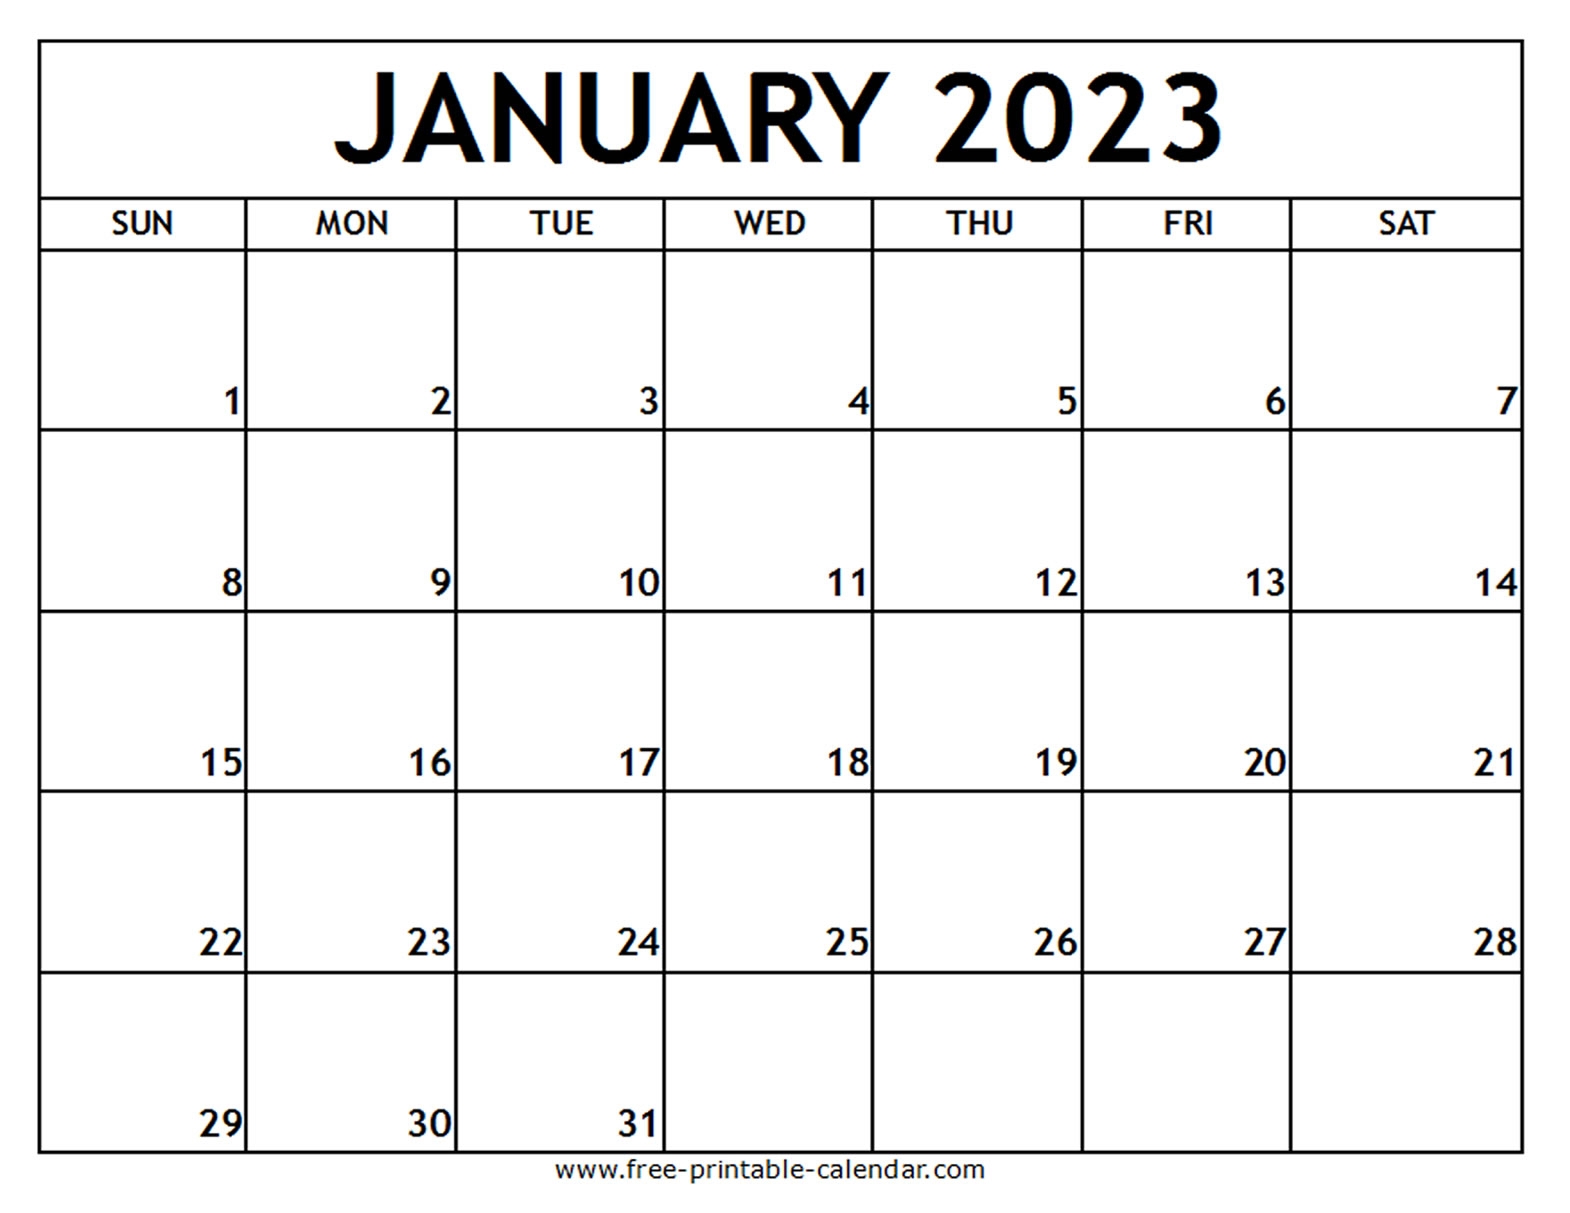 January 2023 Printable Calendar Free printable calendar